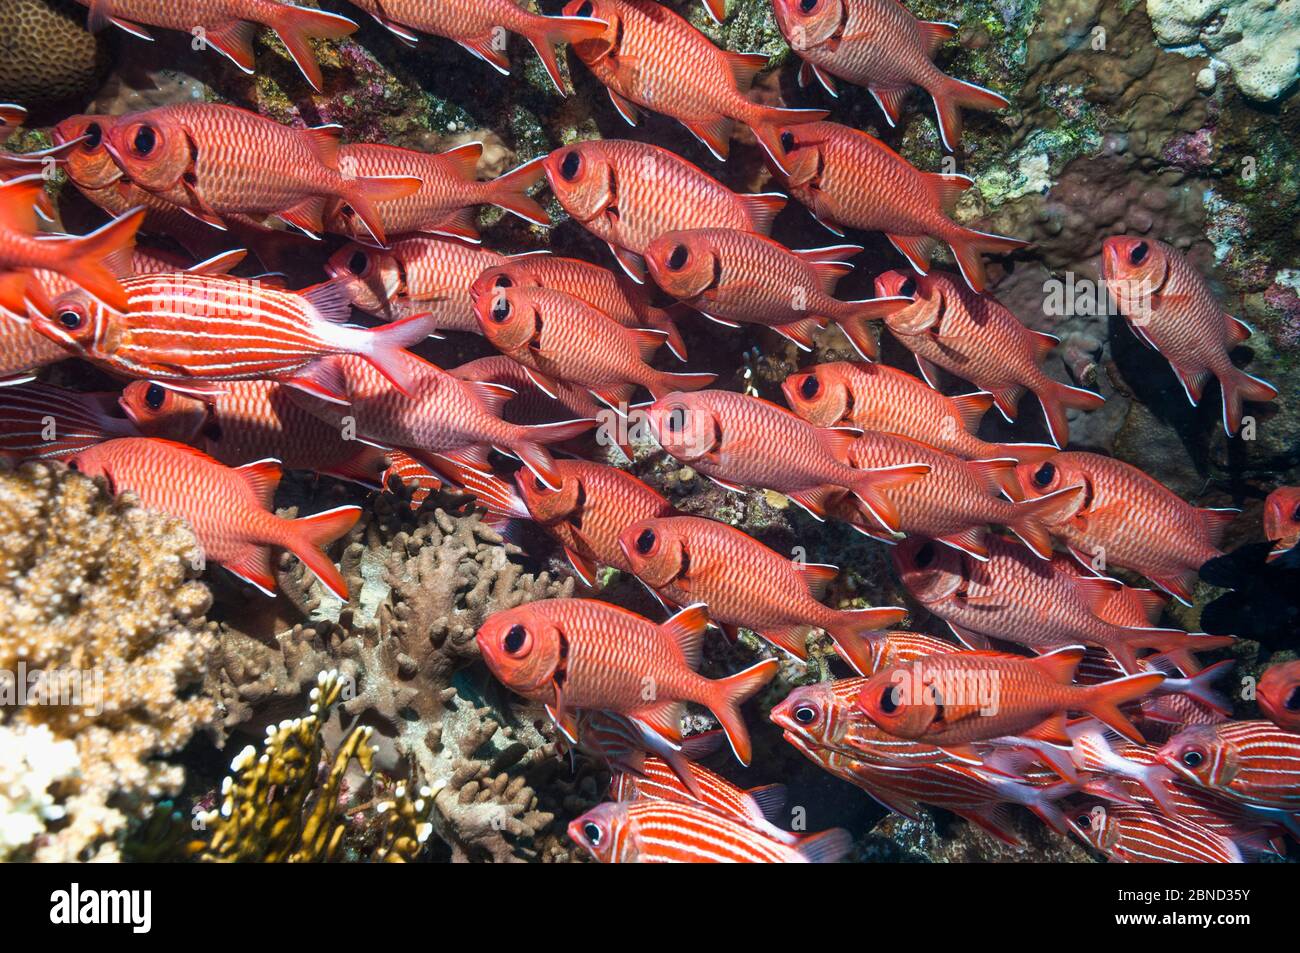 Red soldierfish (Myripristis murdjan) school on wreck.  Egypt, Red Sea. Stock Photo